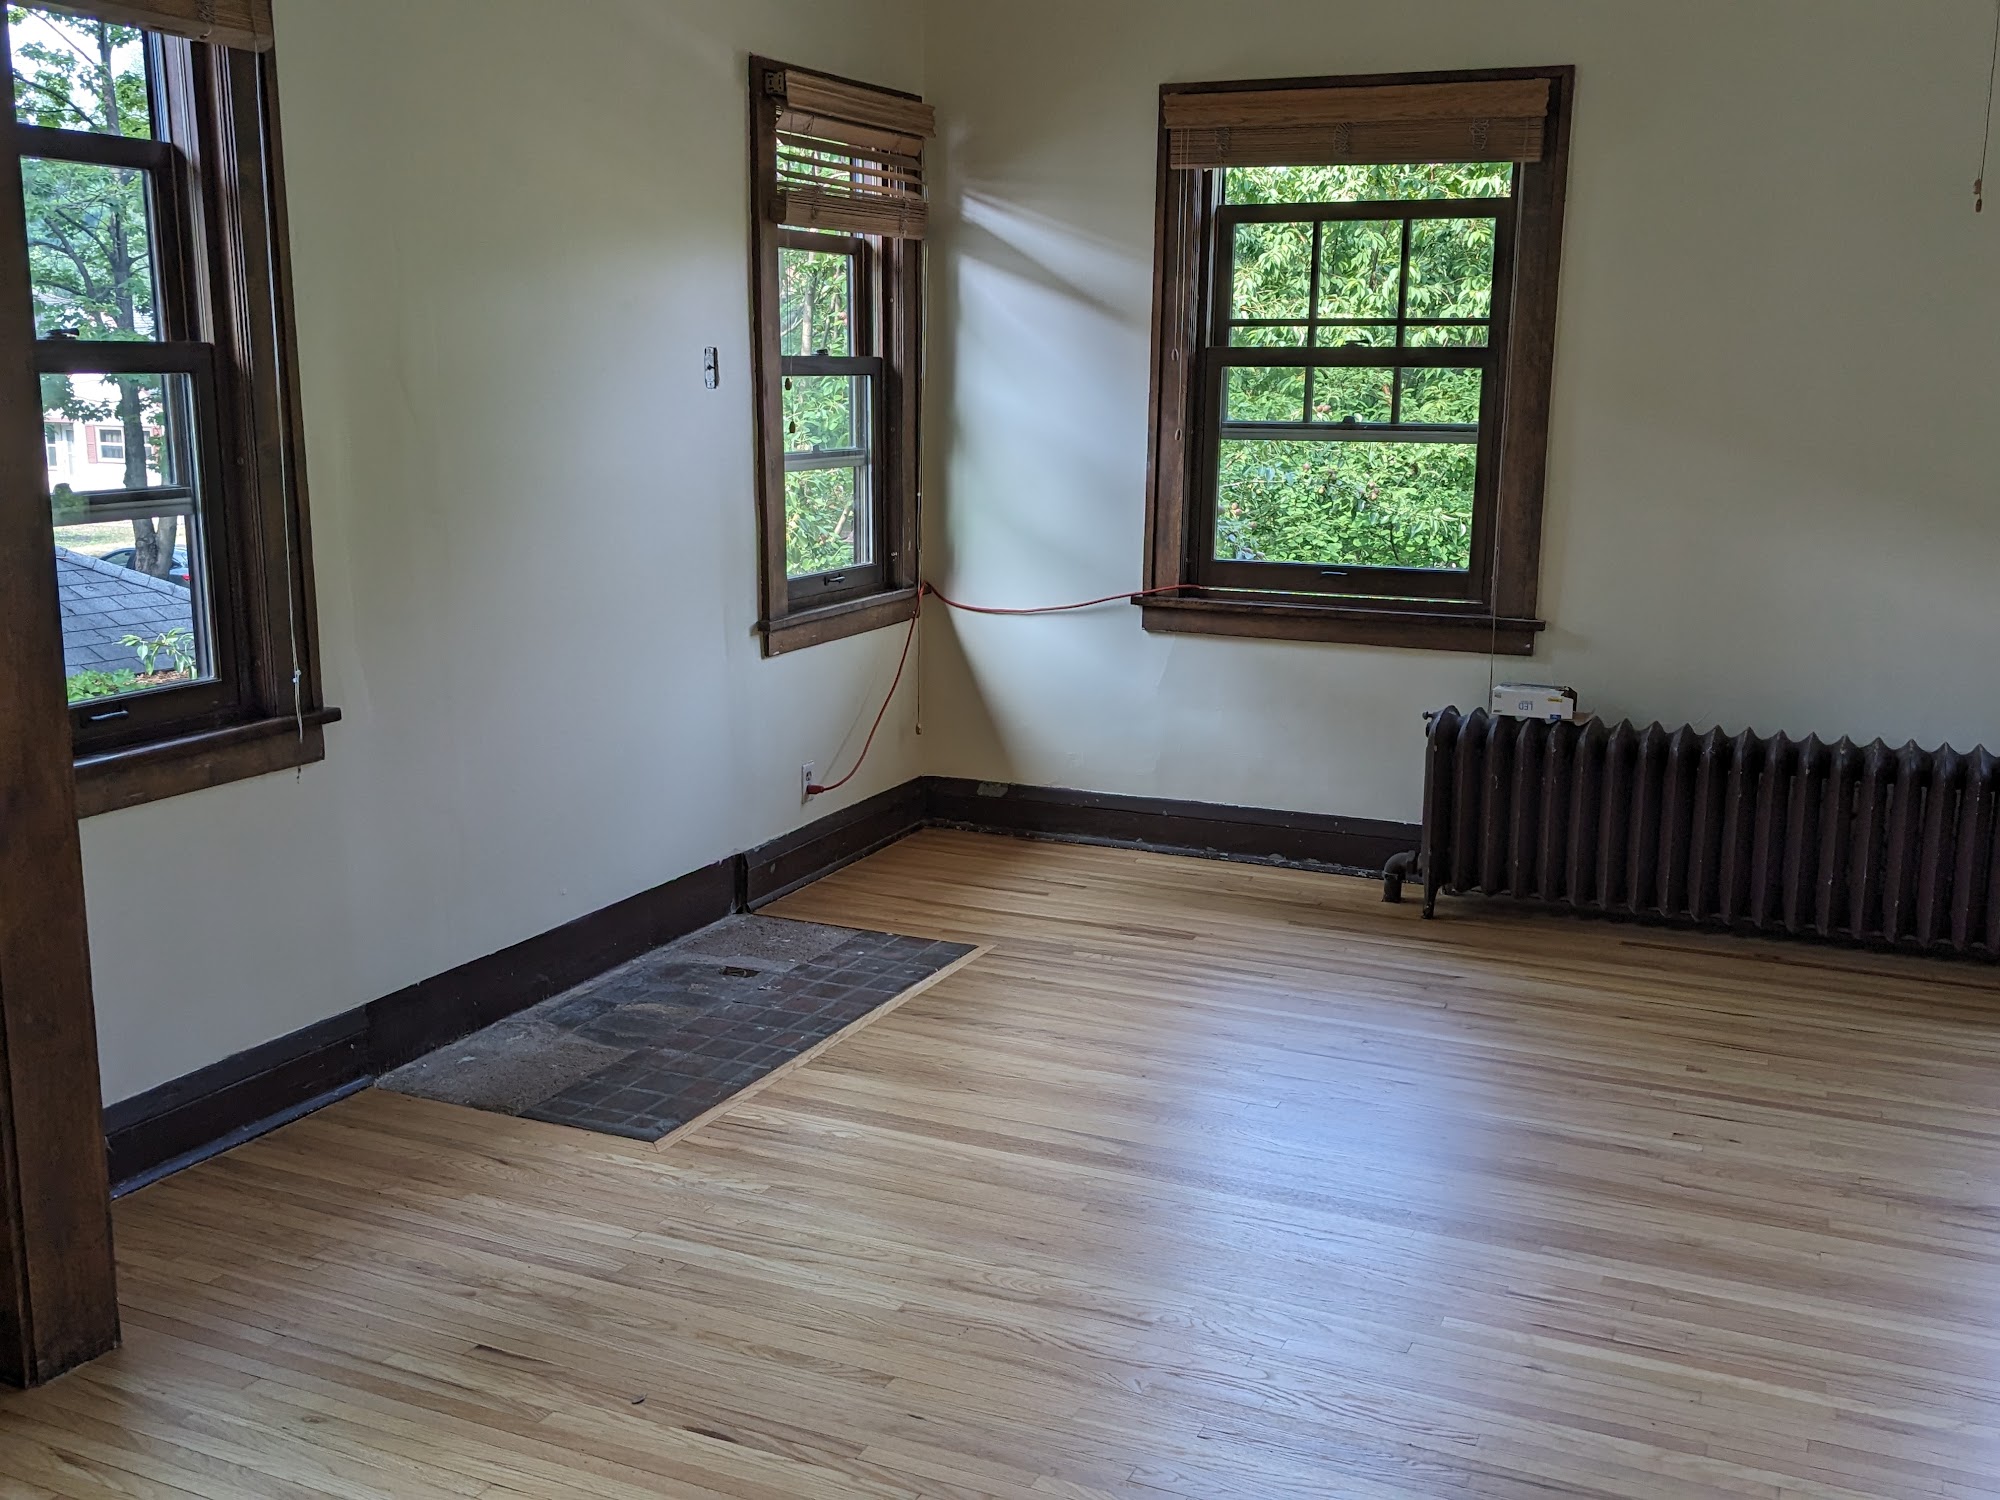 Earl's Floor Sanding & Install 316 W 49th St, Minneapolis, MN 55419